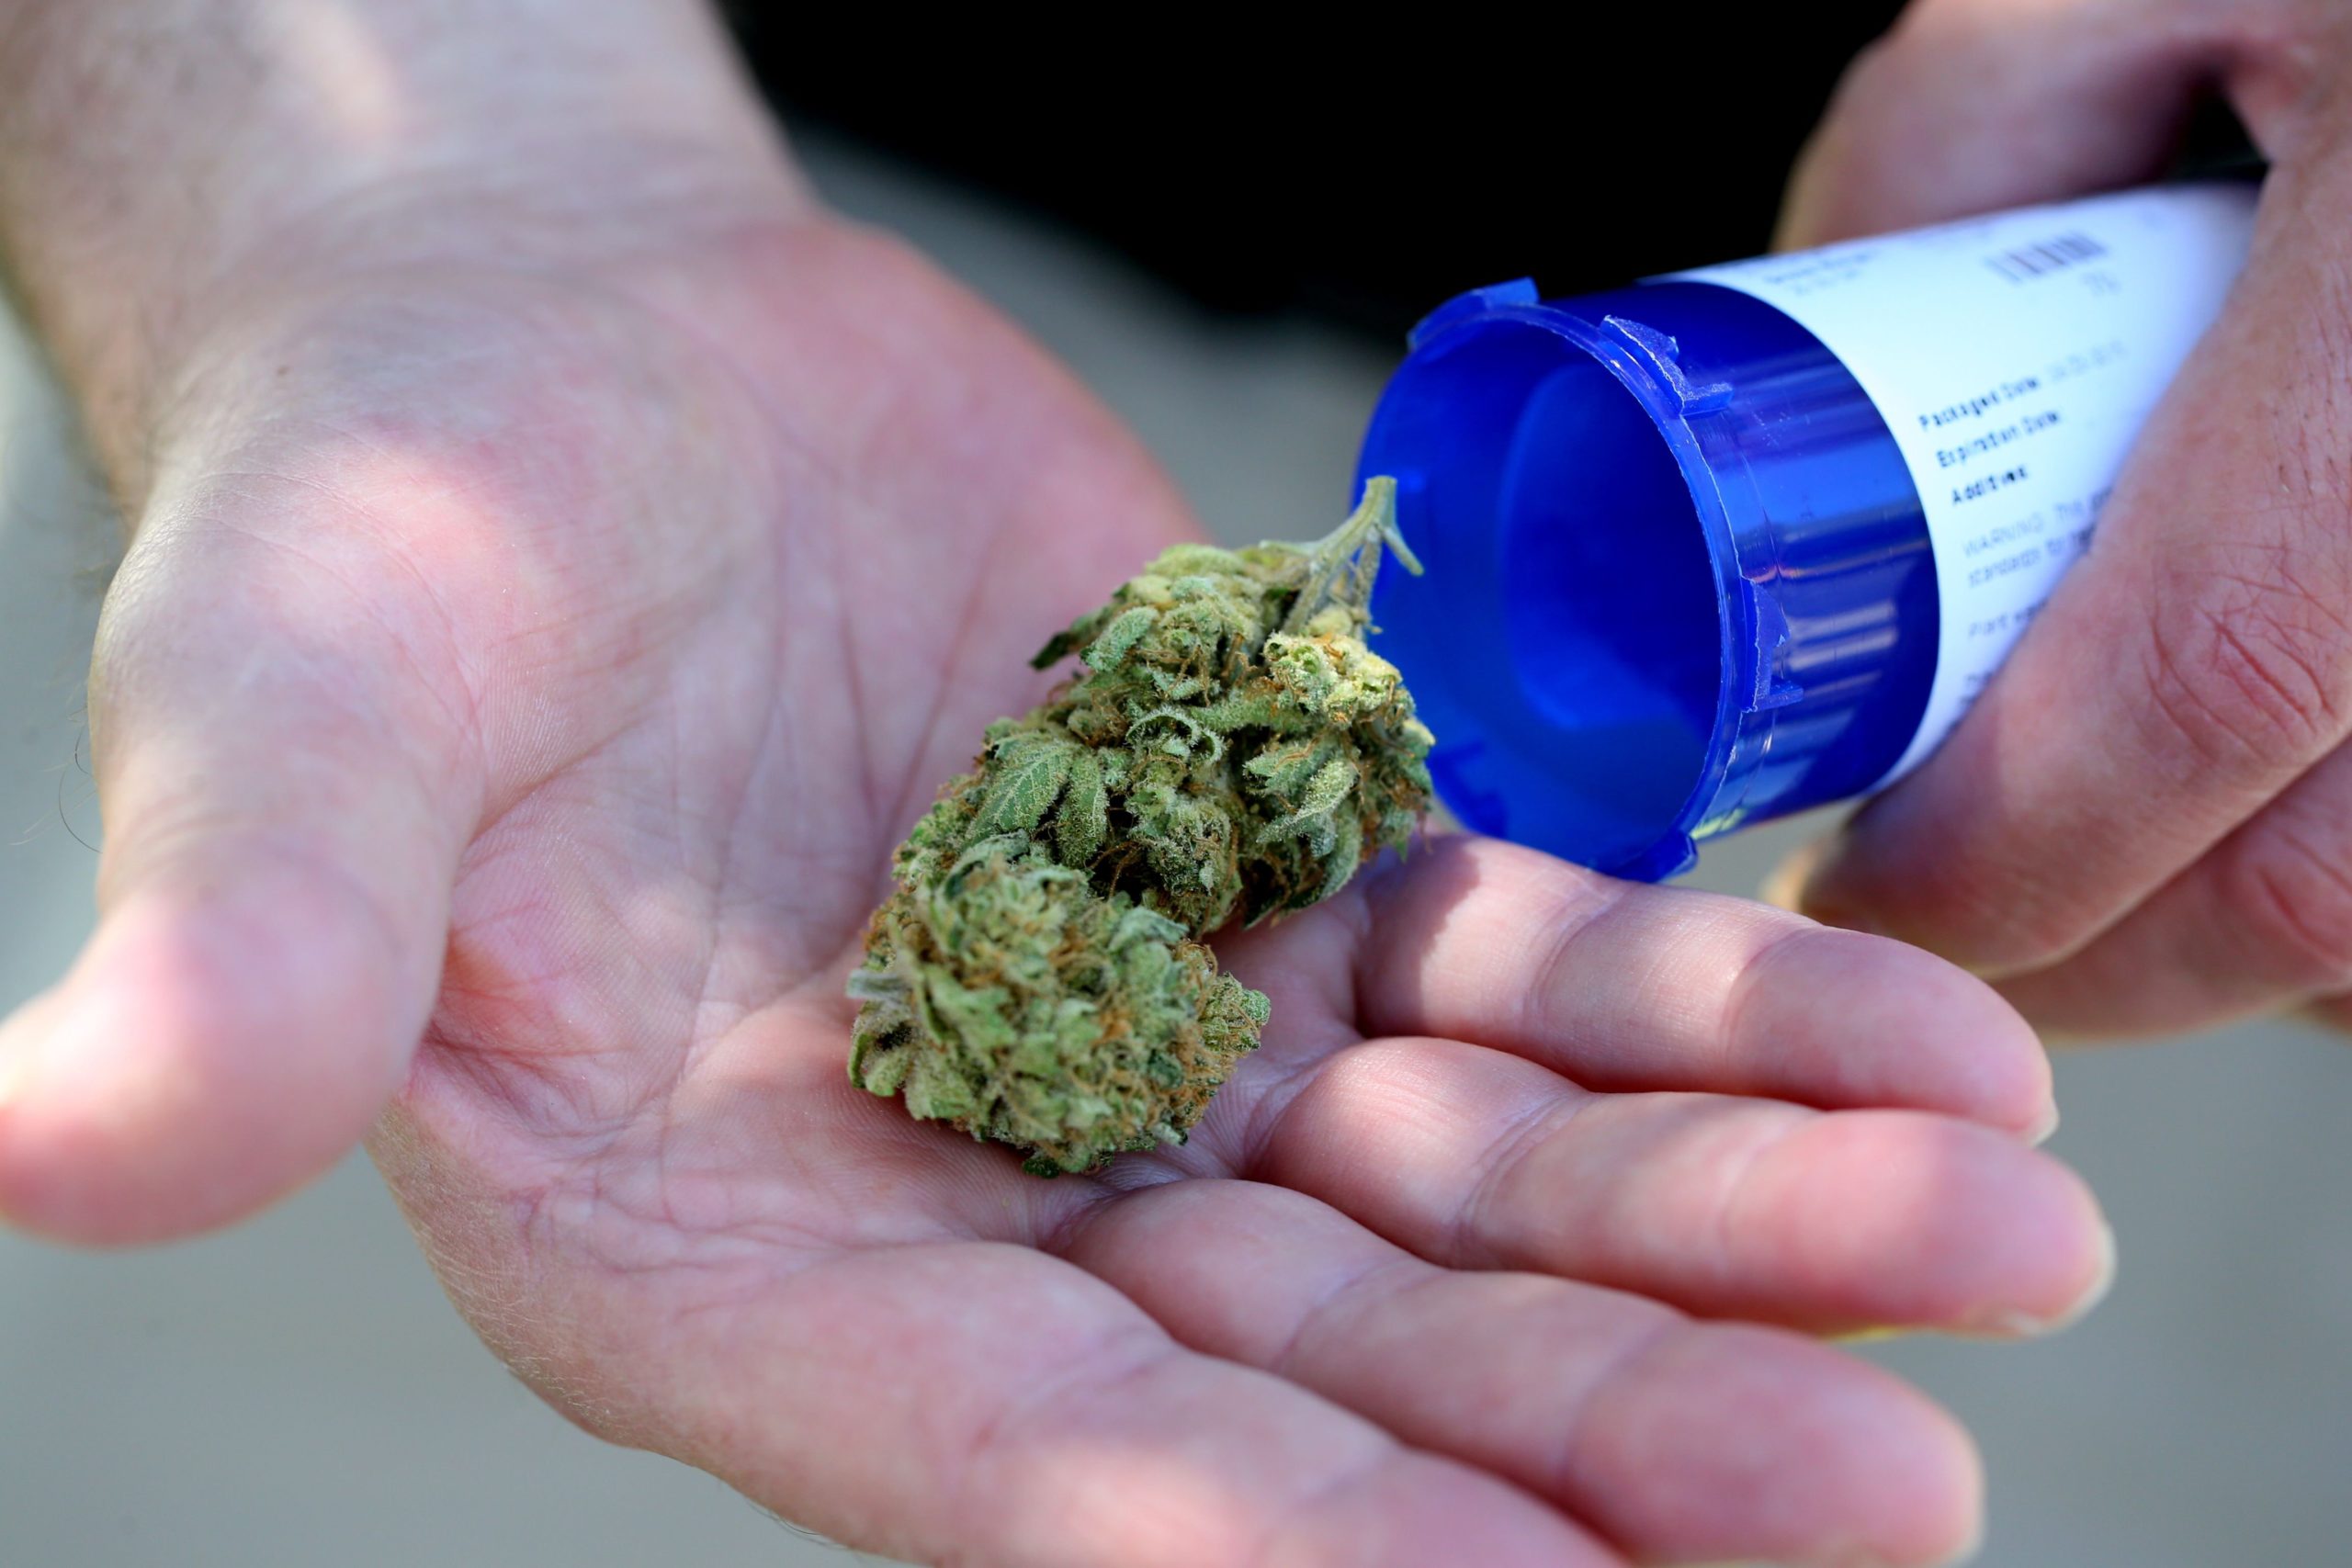 US lawmakers look to legalize pot in 'historic' marijuana reform hearing